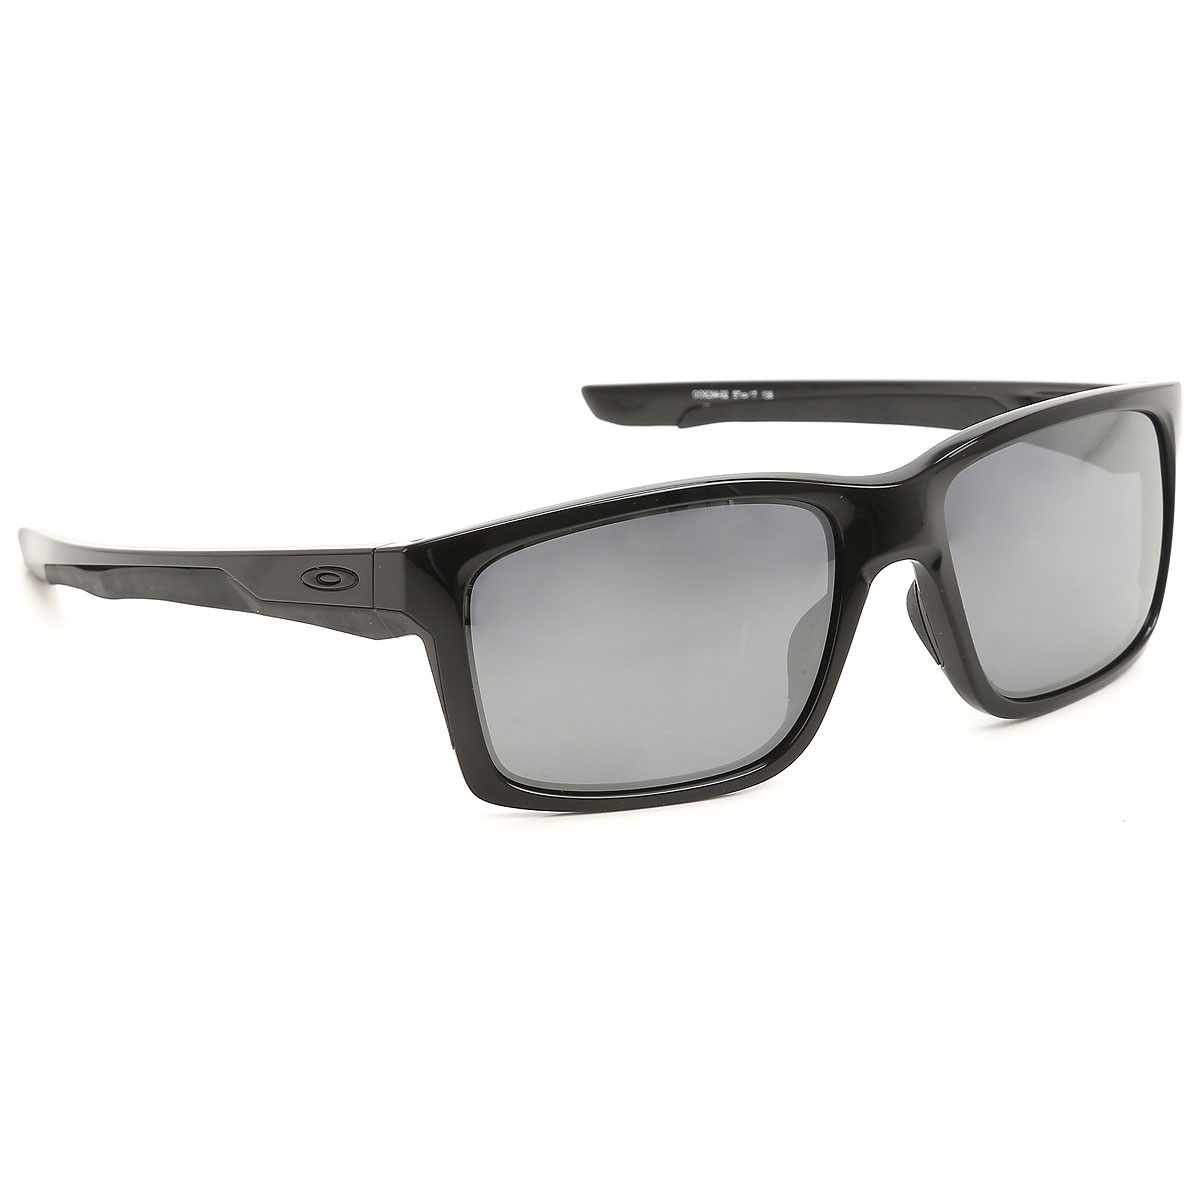 Sunglasses Oakley, Style code: mainlink-oo9264-02